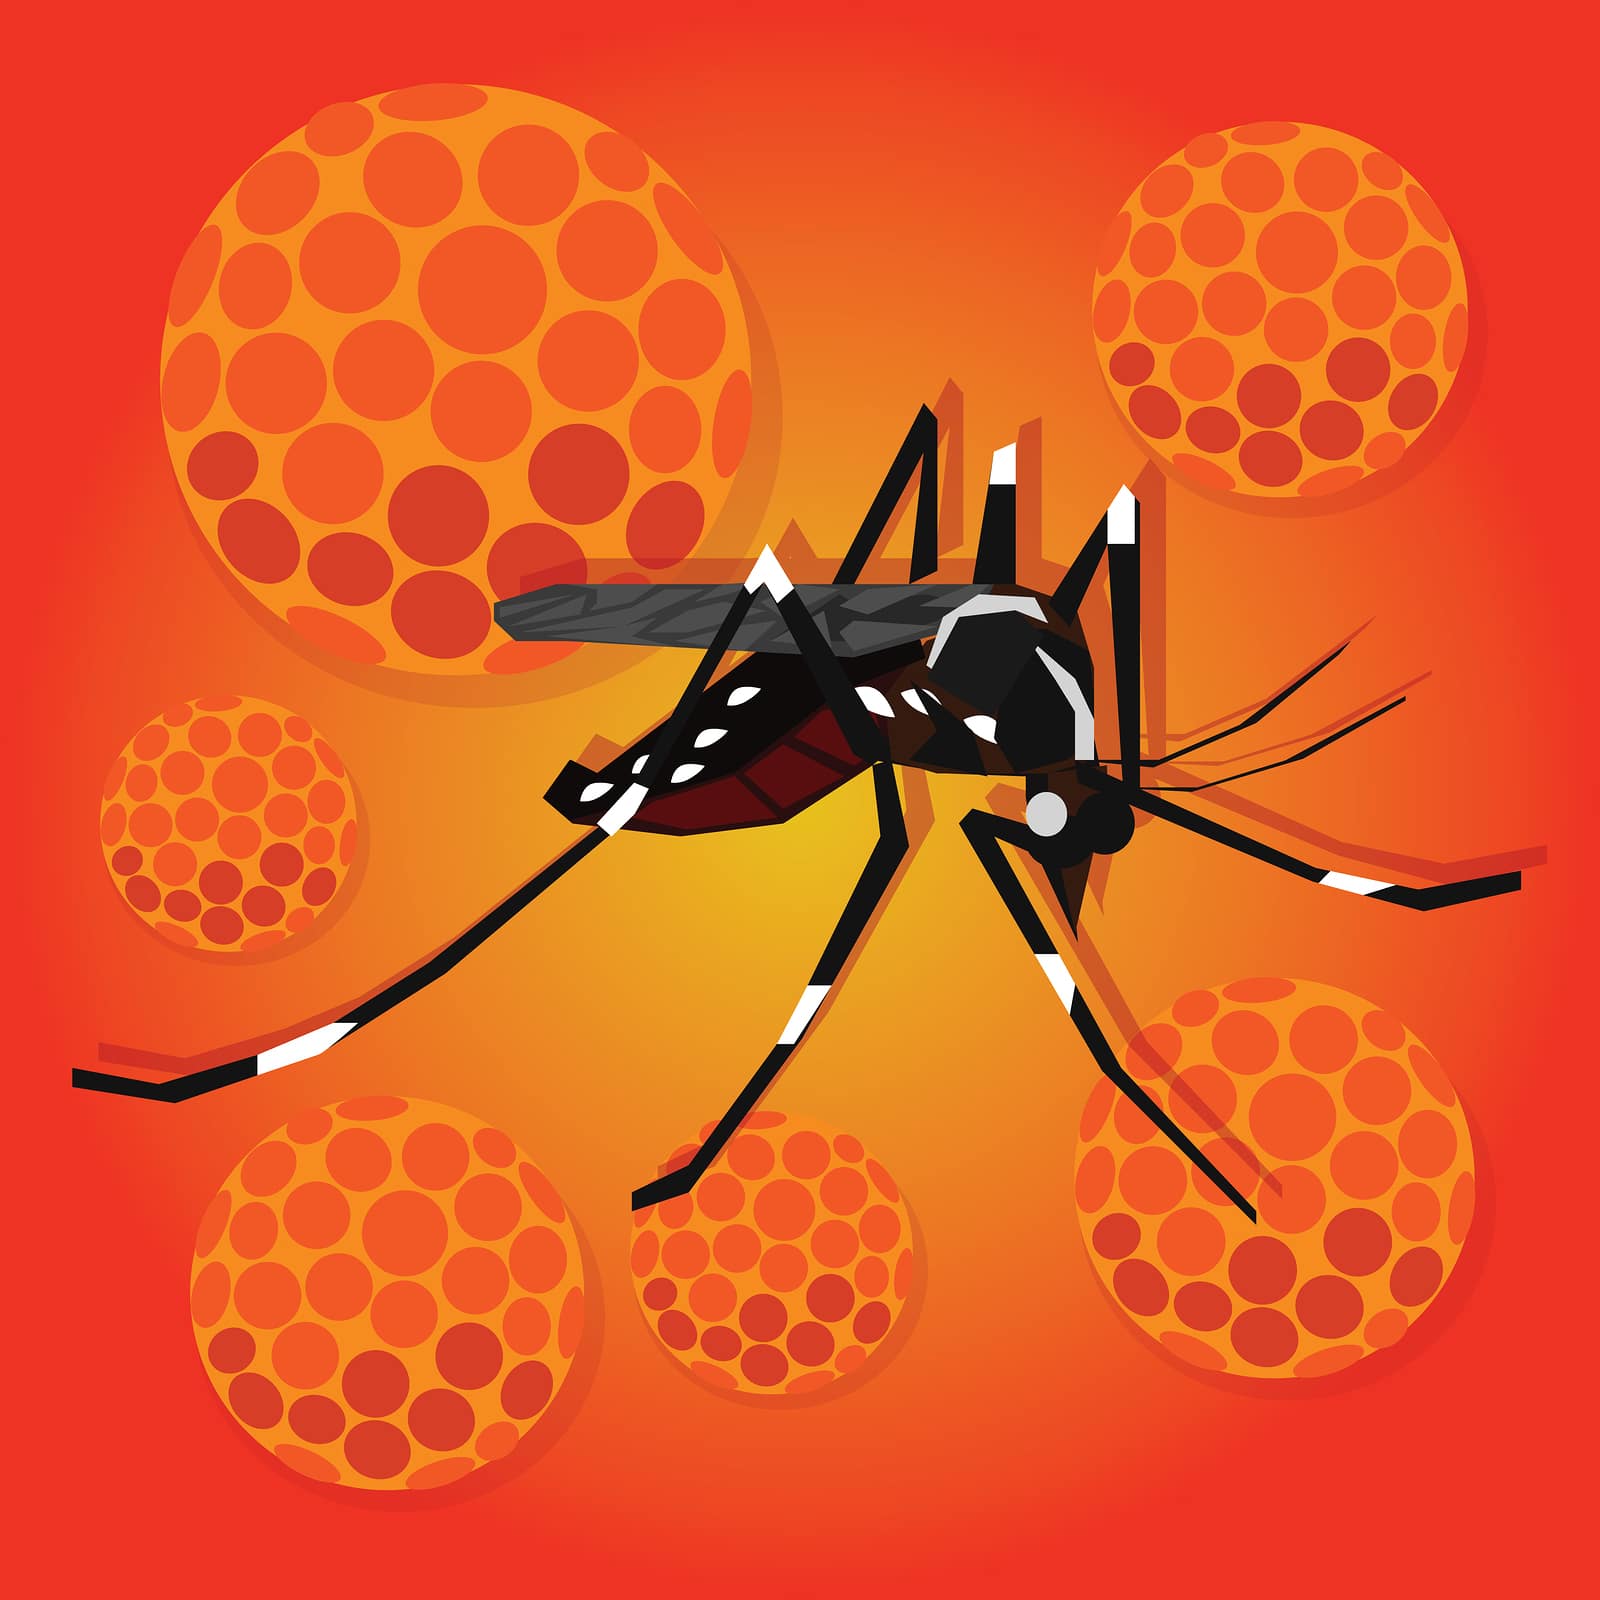 zika zica virus masquito virus aedes aegypti spread pandemic aoubreak vector illustration